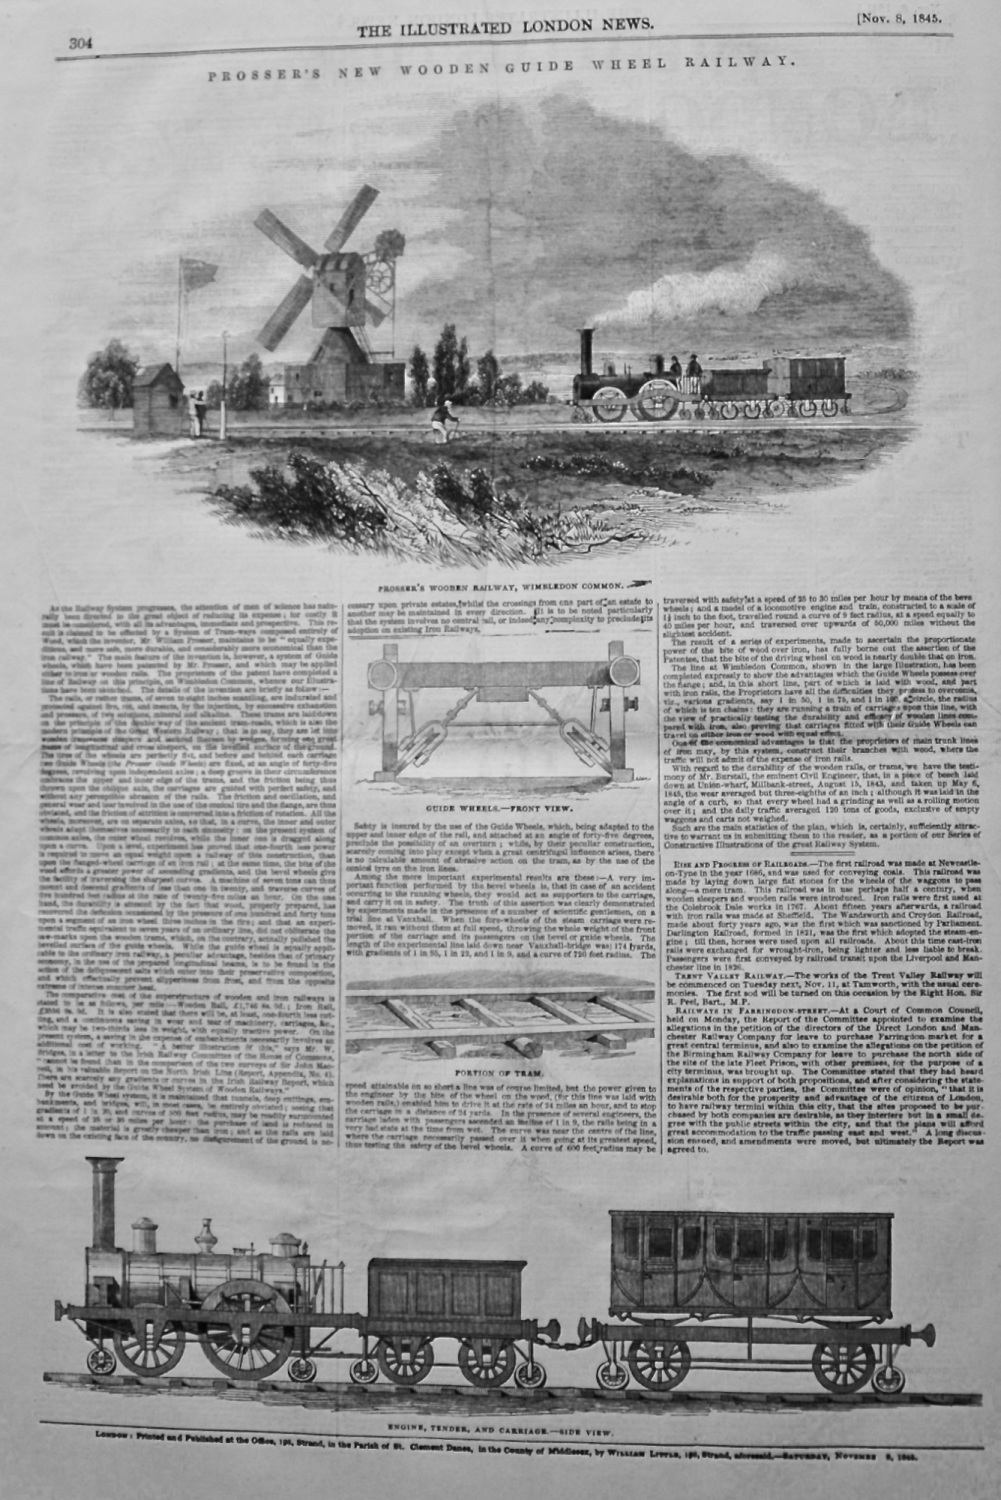 Prosser's New Wooden Guide Wheel Railway. 1845.